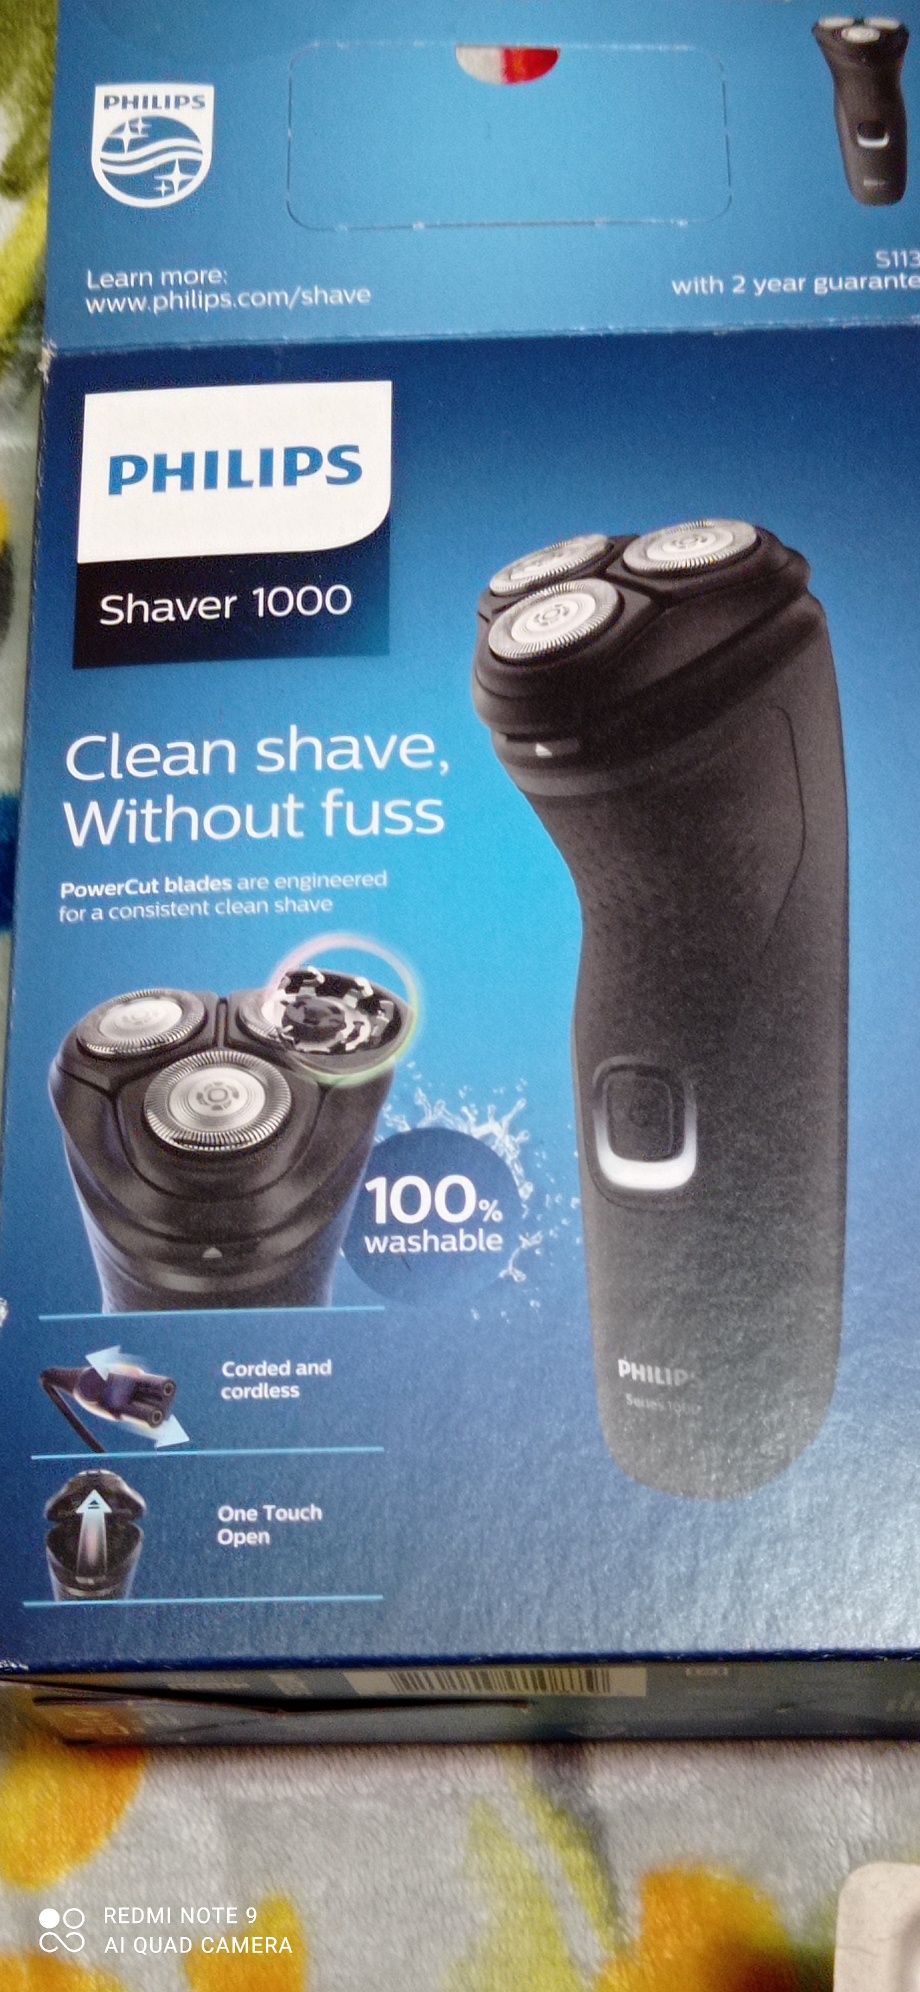 Philips shaver 1000